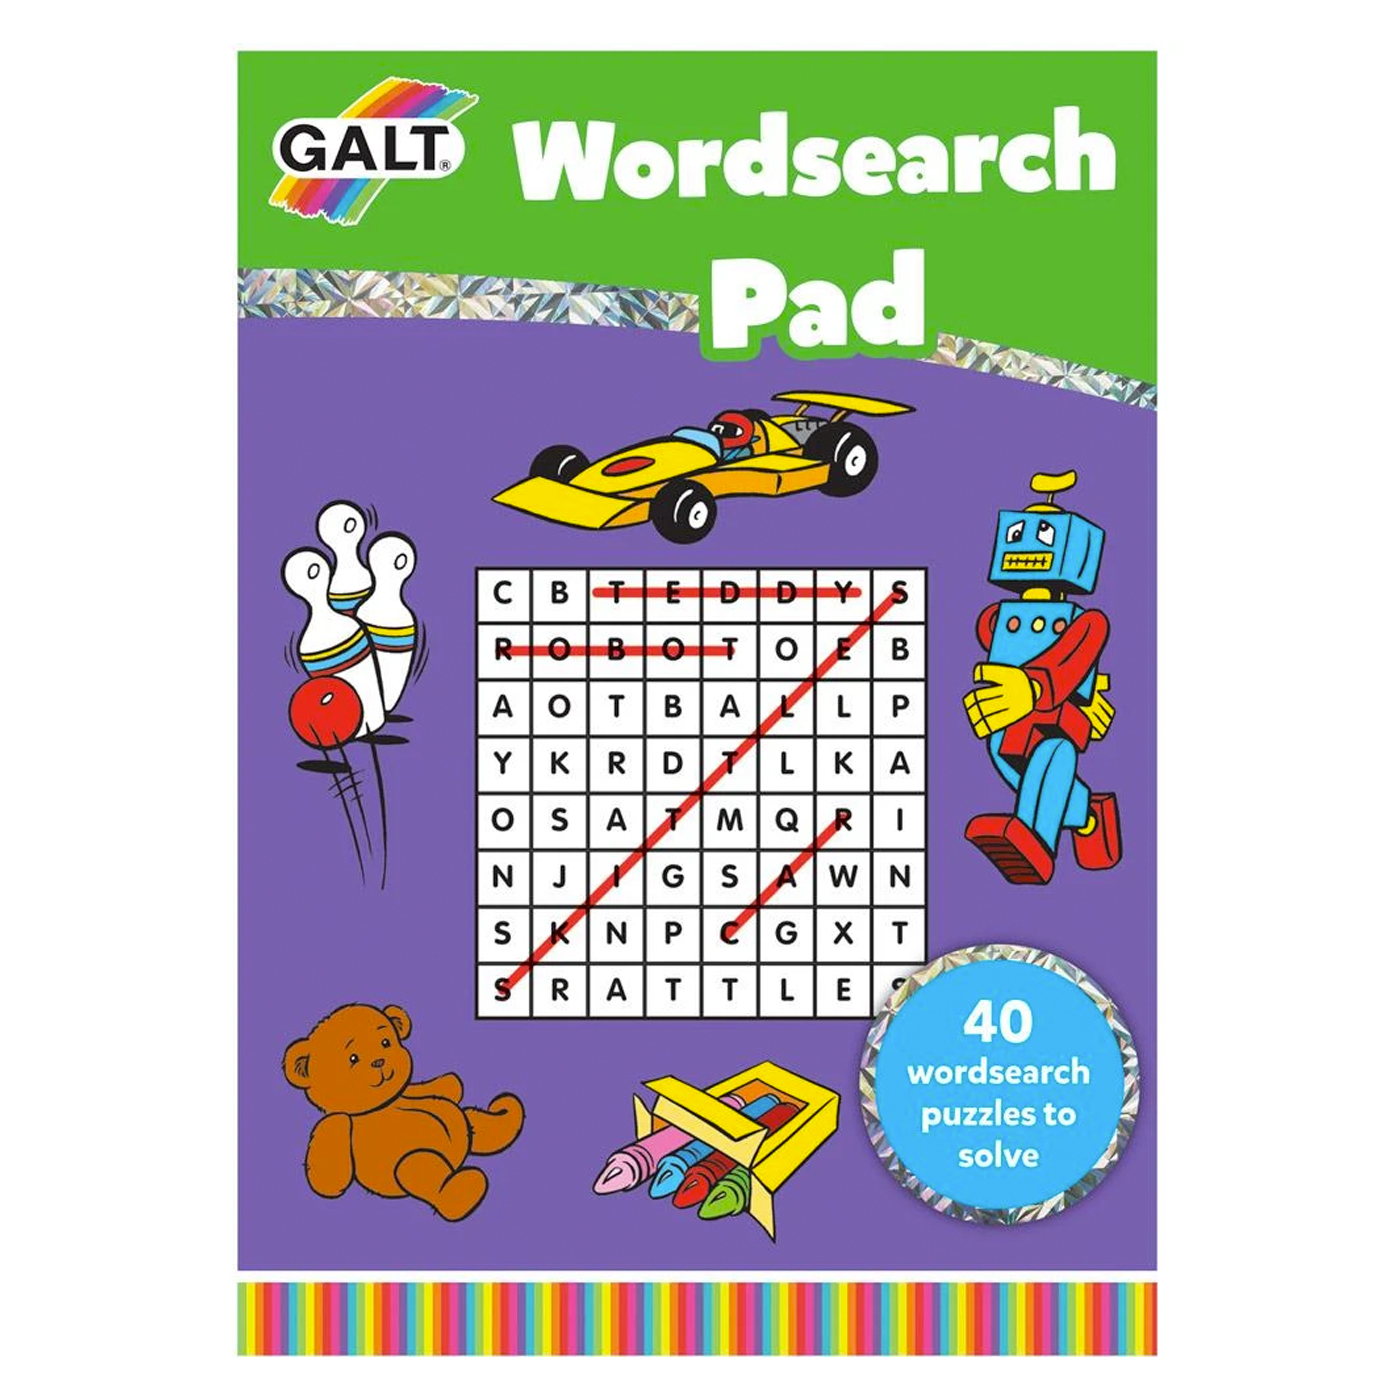  Galt Wordsearch Pad